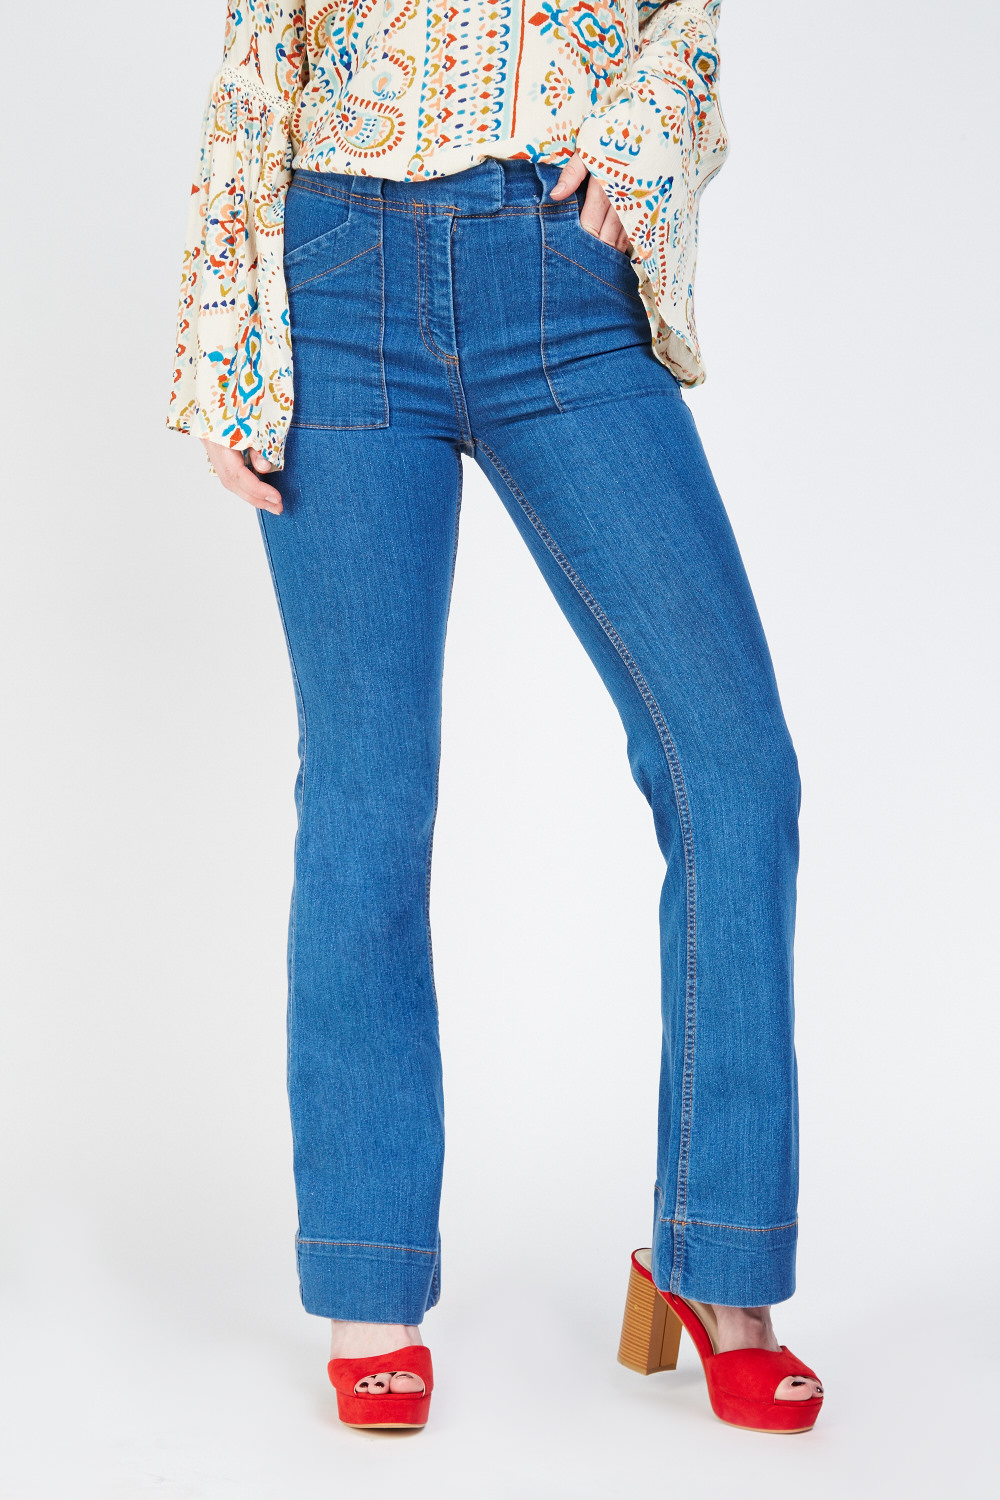 Low Waist Flared Denim Jeans - Just $7